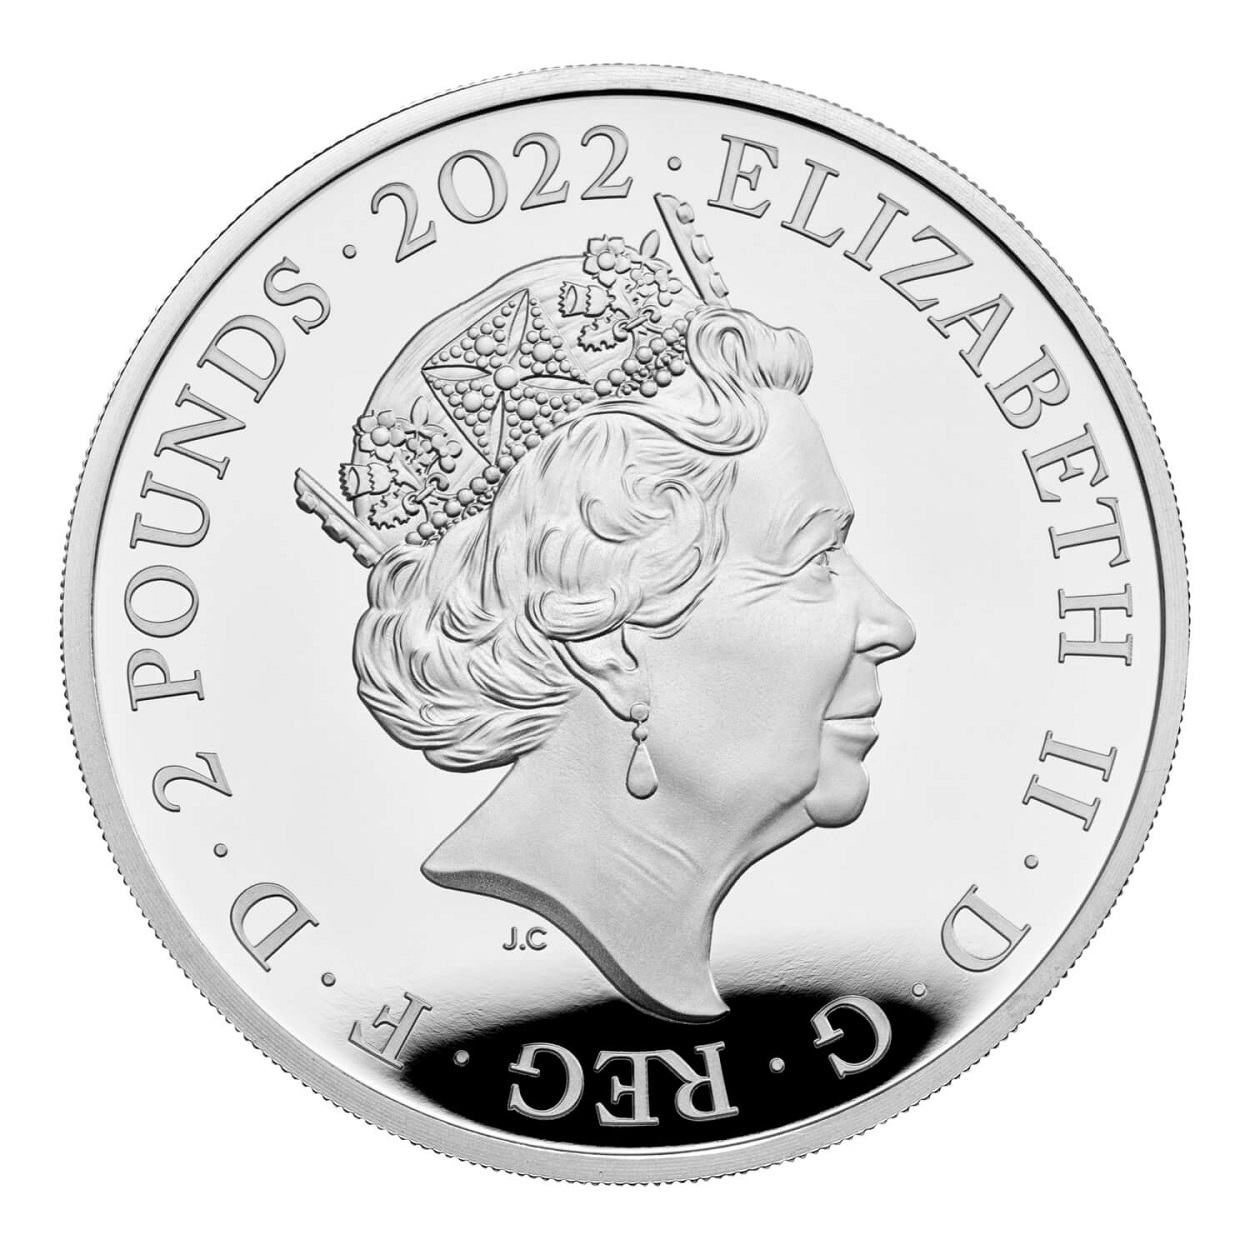 (W185.2.P.2022.UK22PRSP) 2 Pounds United Kingdom 2022 1 oz Proof silver - Peter Rabbit Obverse (zoom)